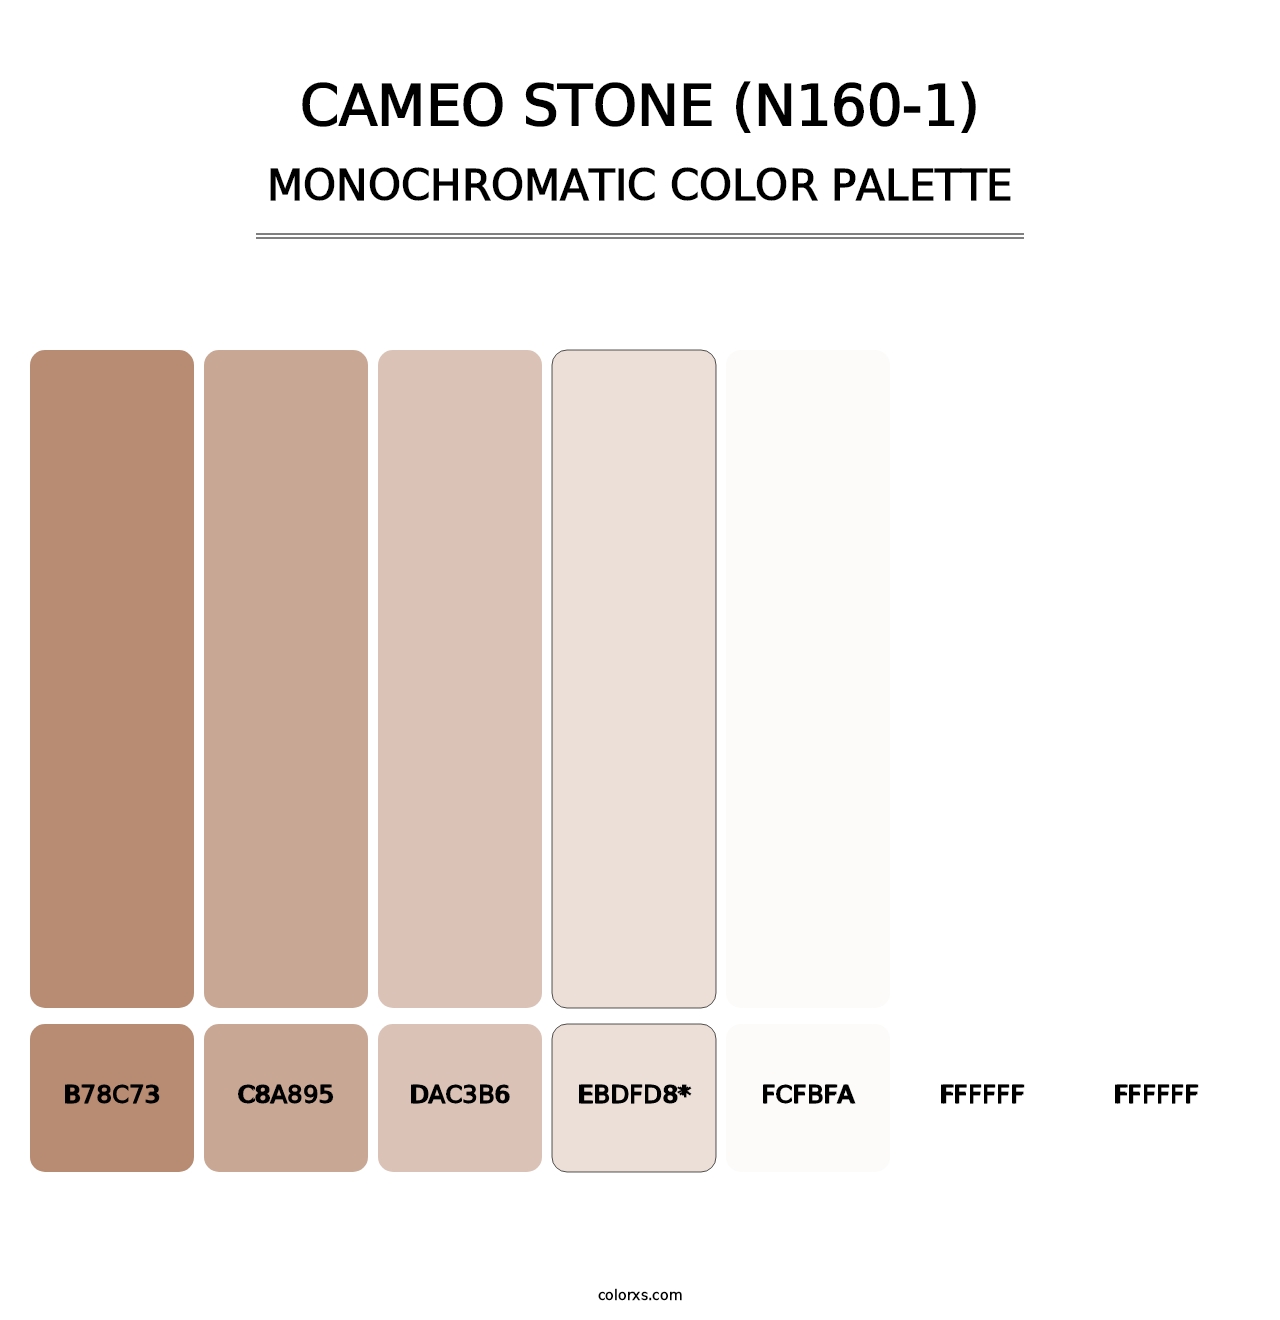 Cameo Stone (N160-1) - Monochromatic Color Palette